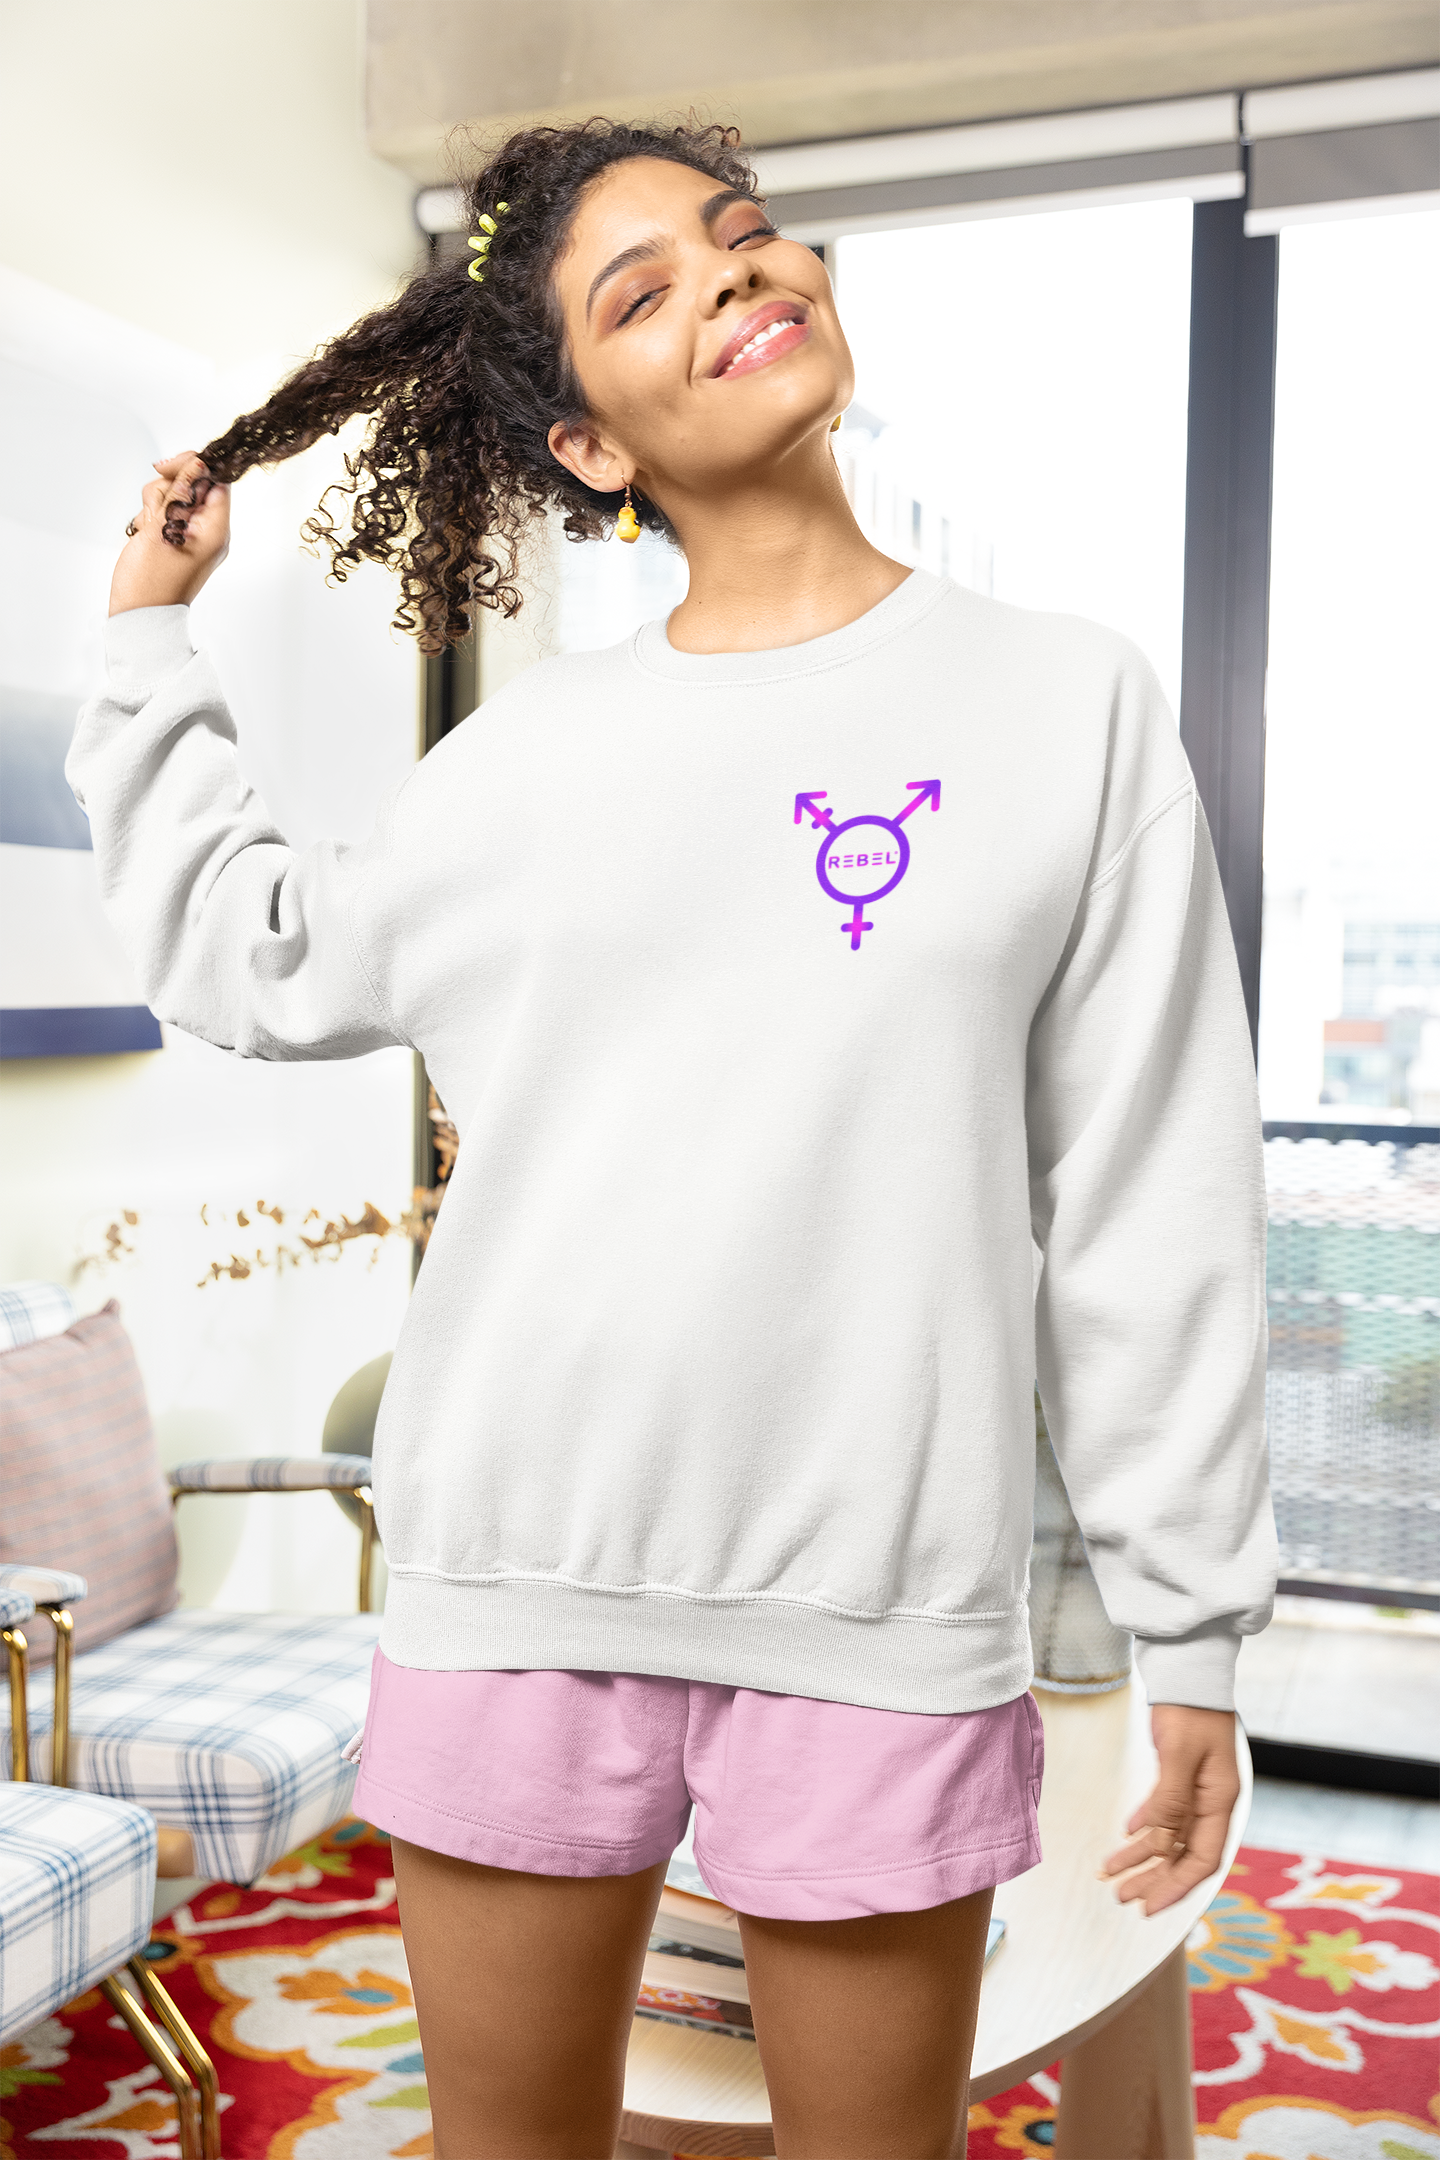 Equal Sweater Women/Unisex